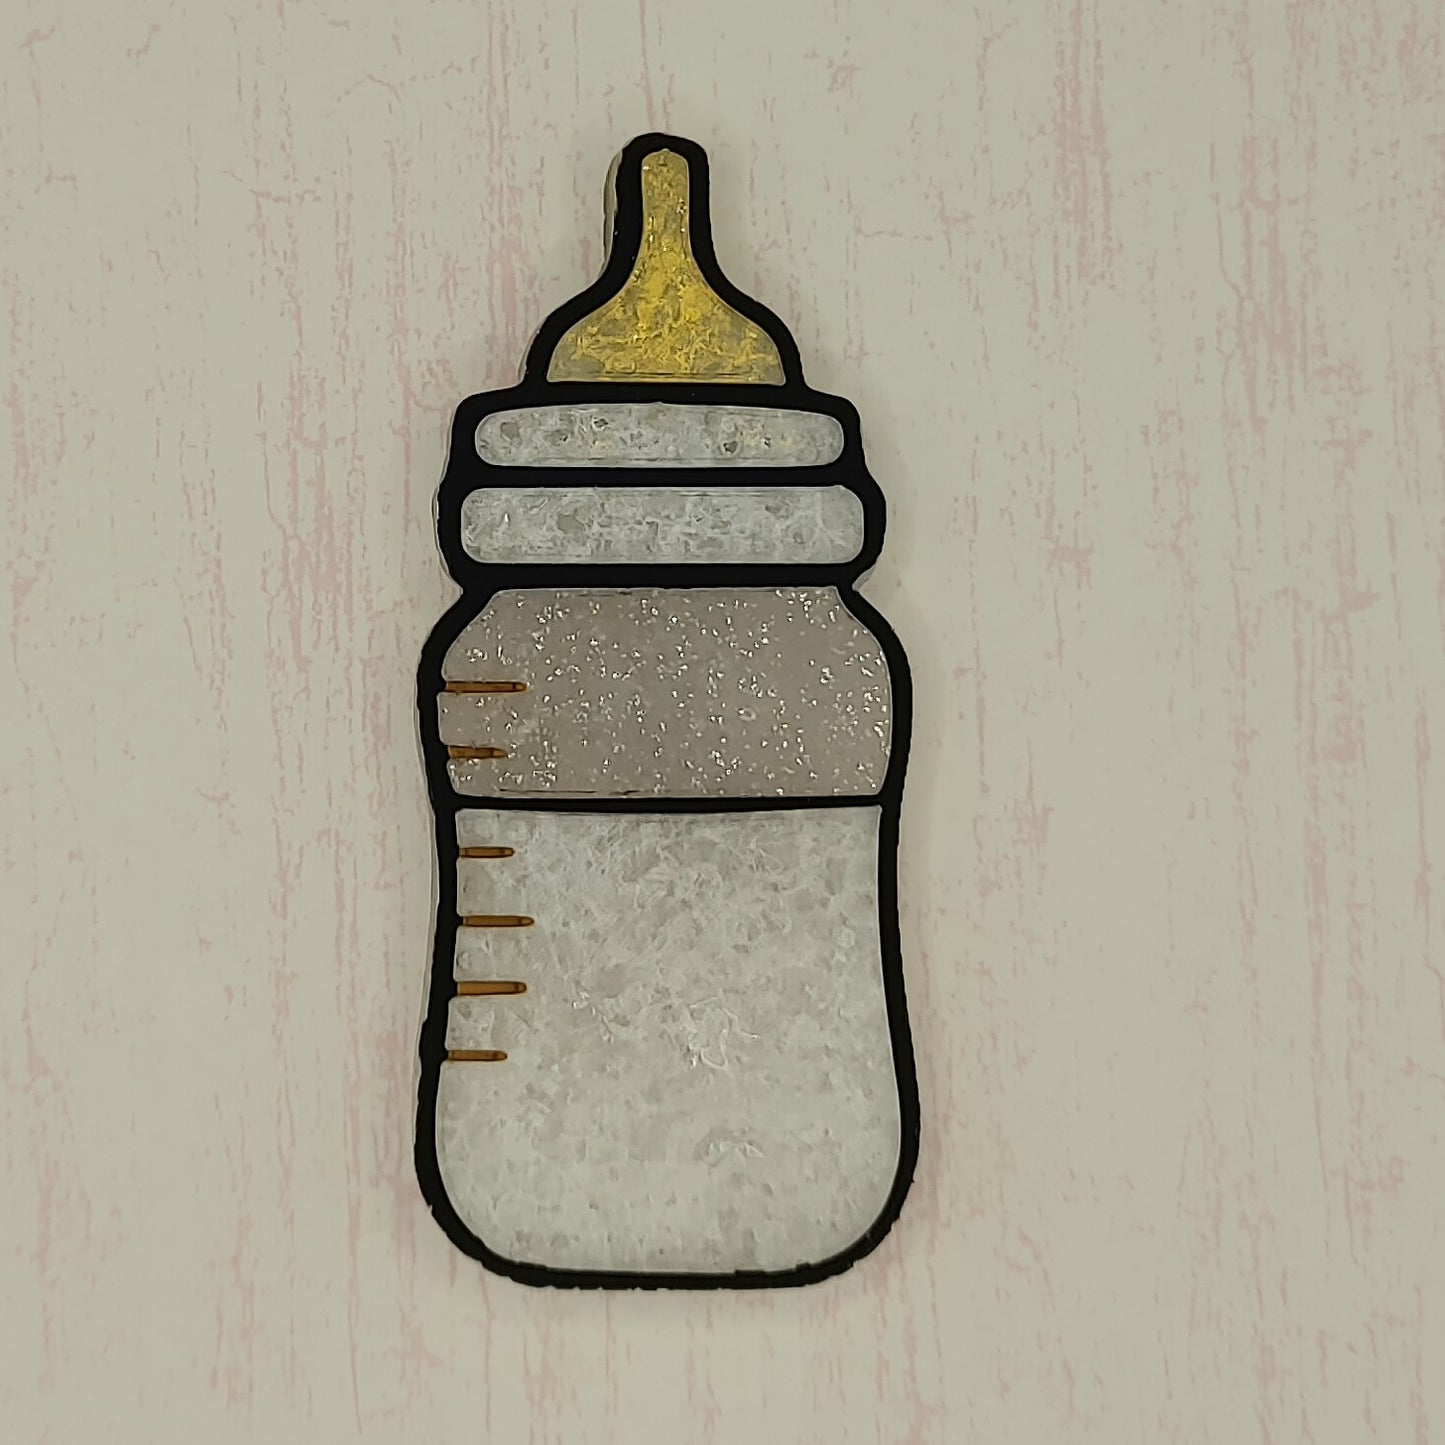 Baby Bottle - Silicone Freshie Mold